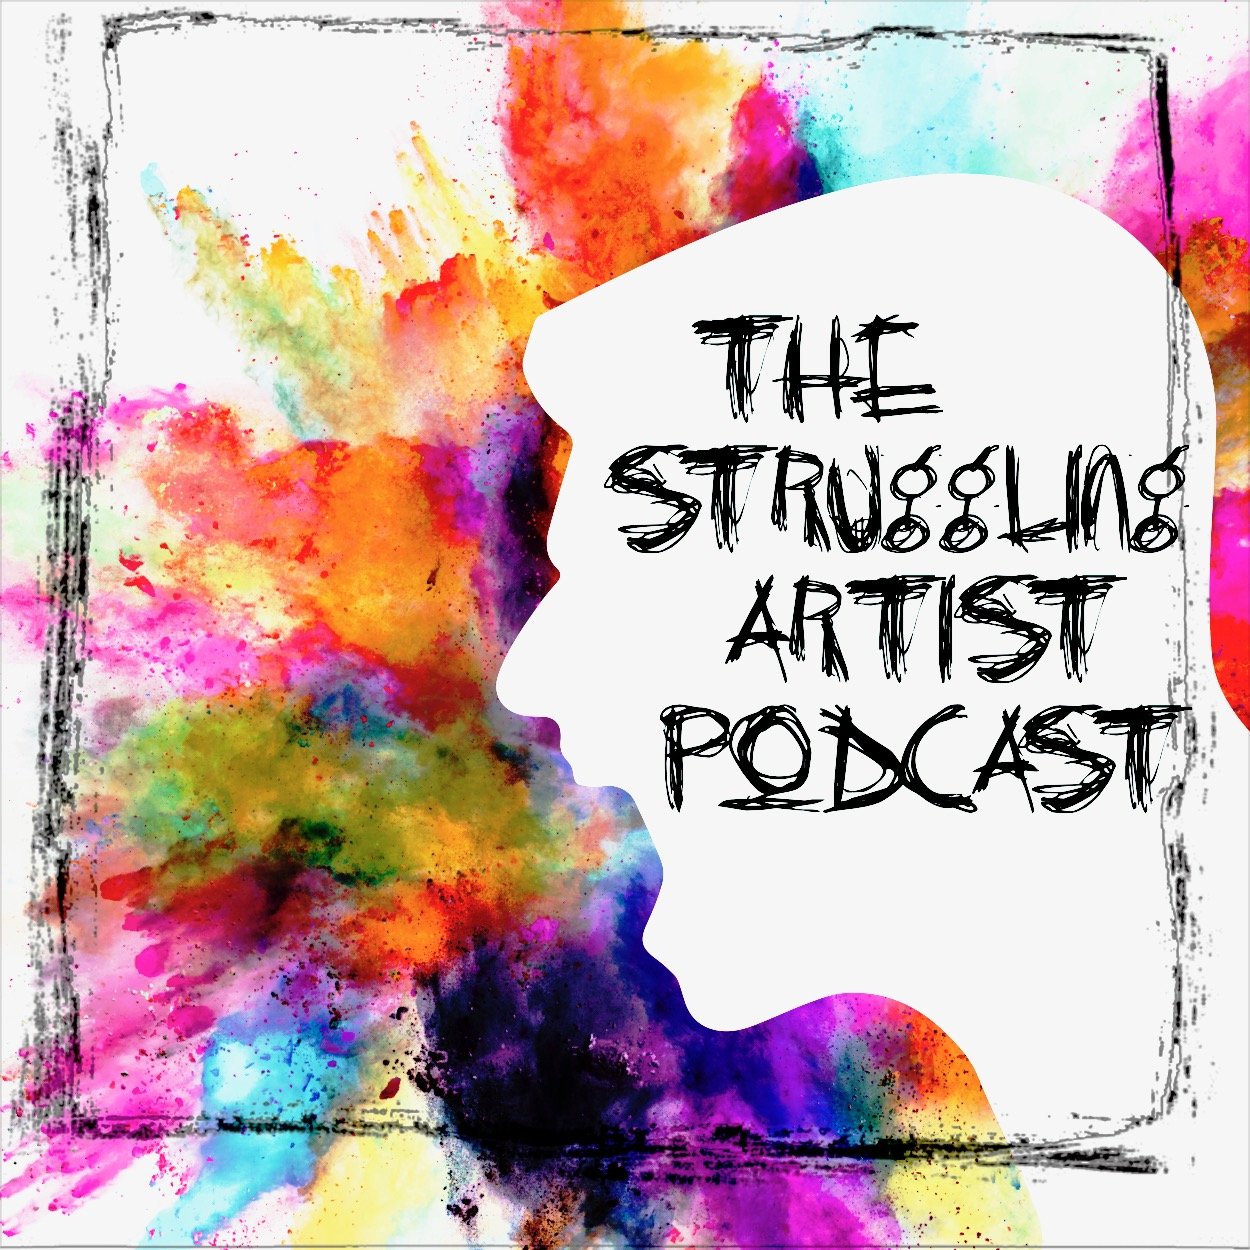 The Struggling Artist Podcast